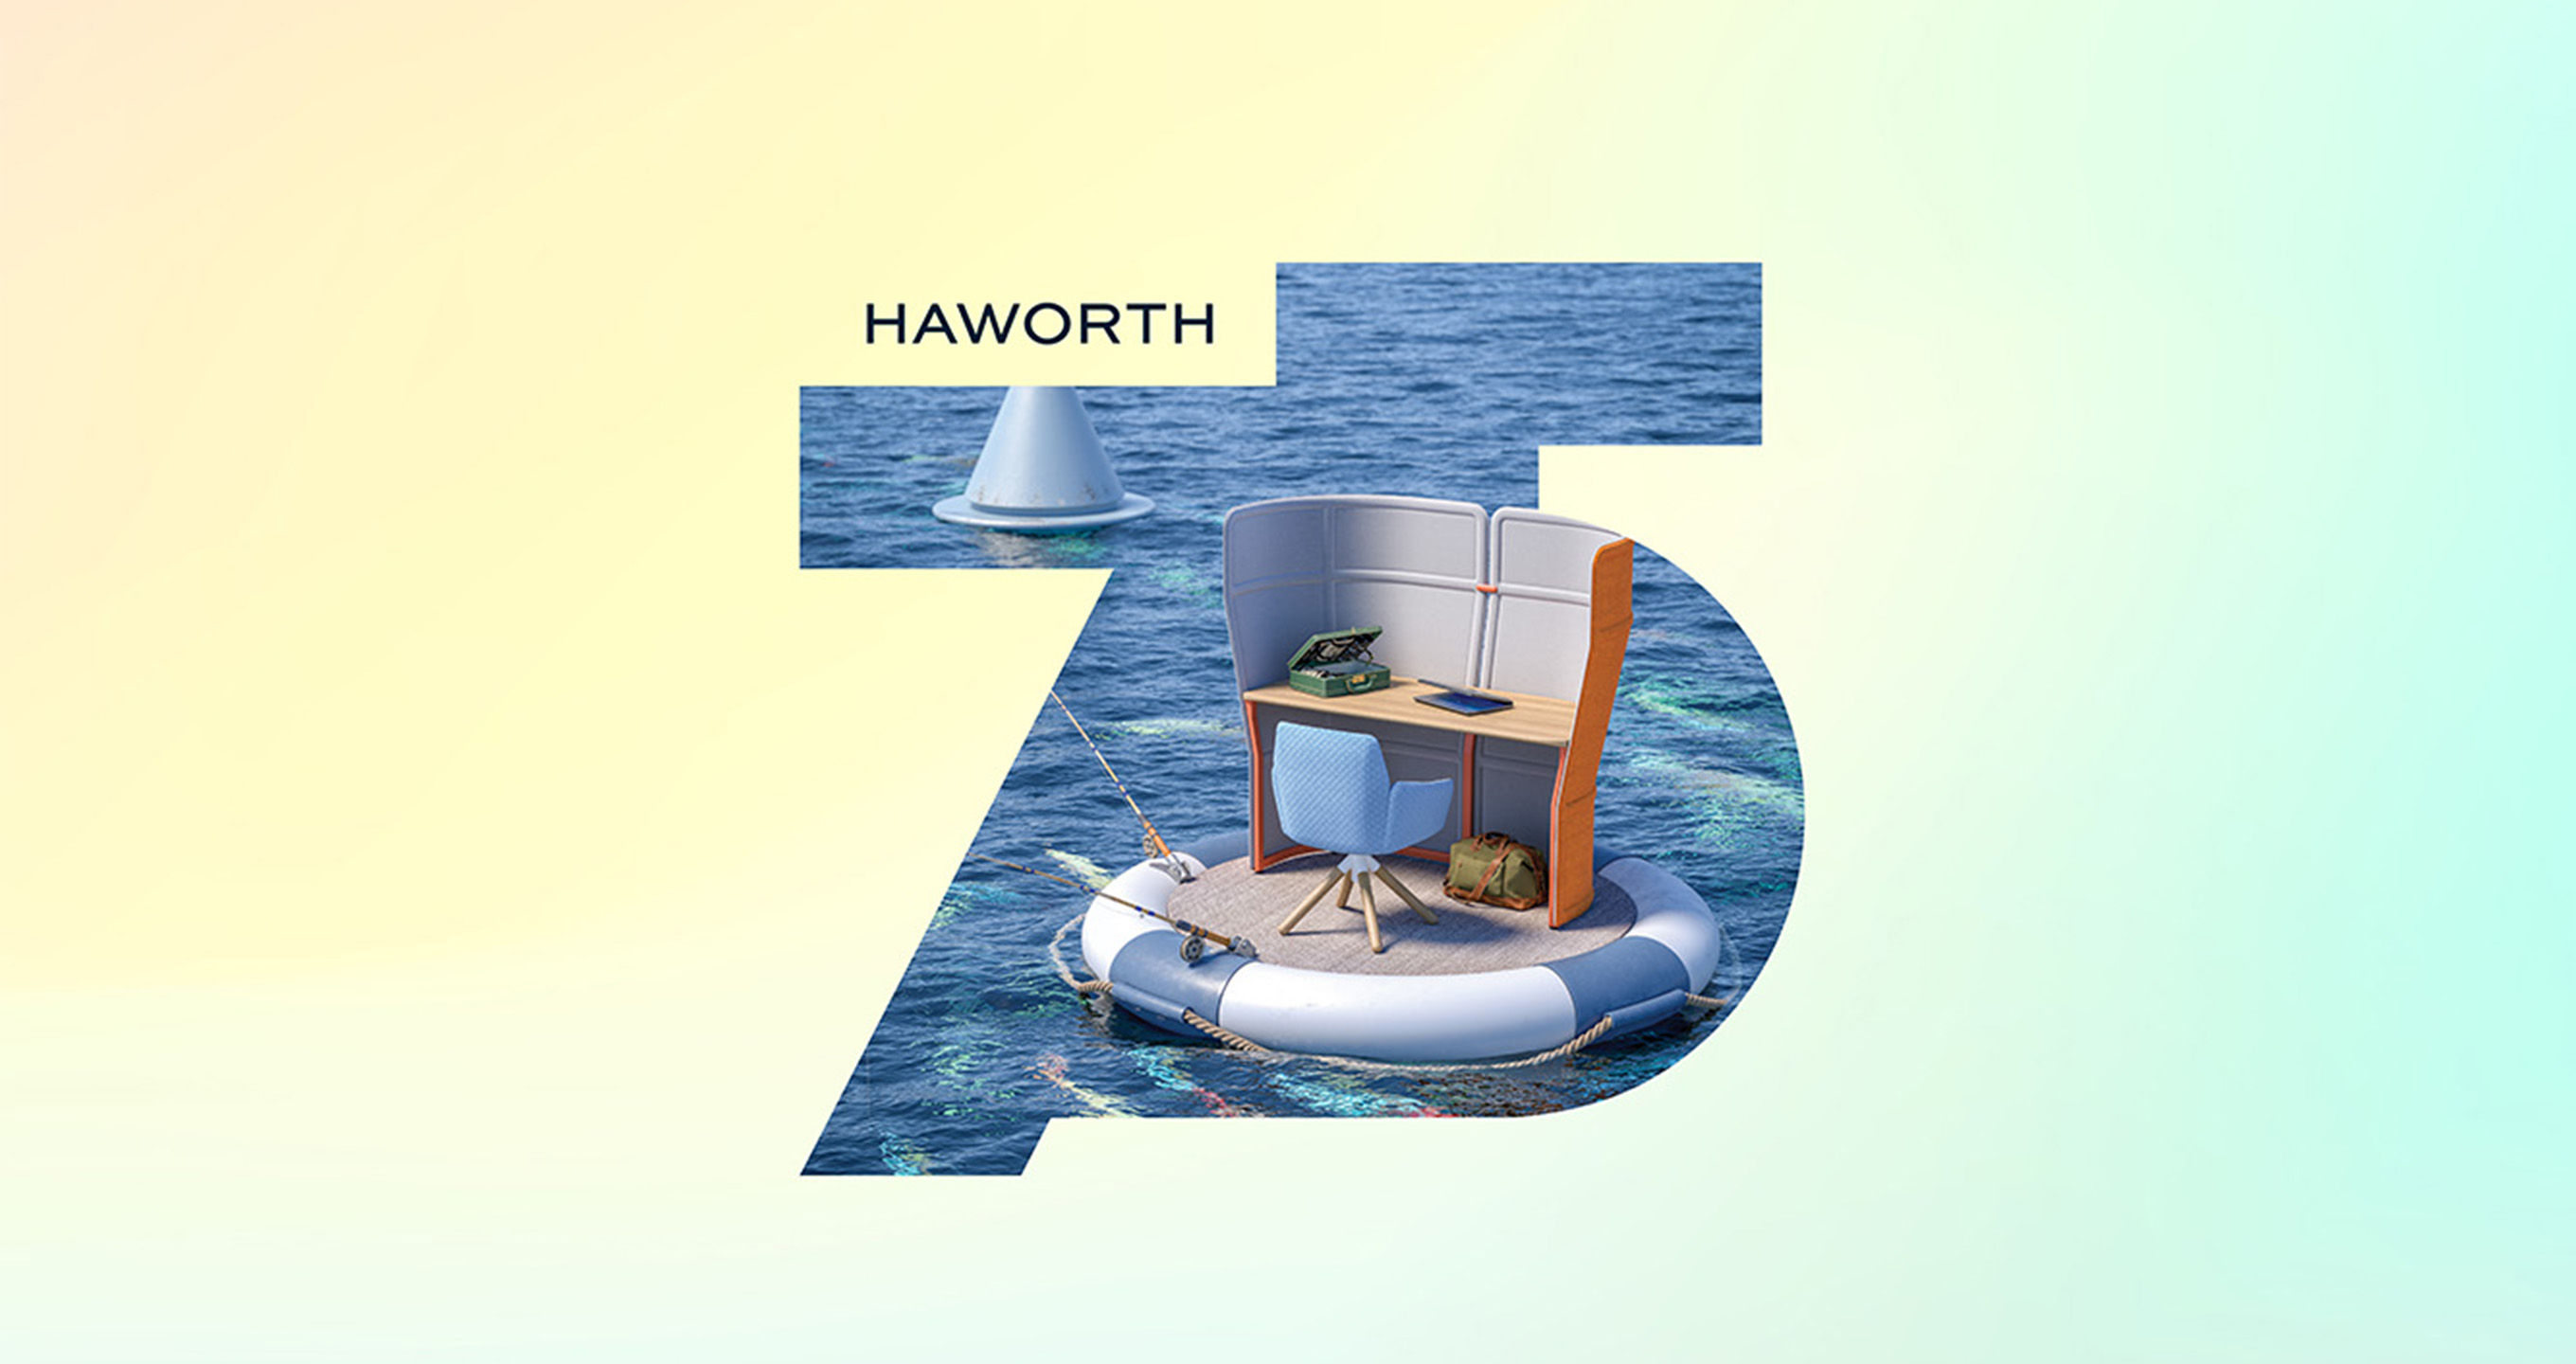 Haworth 75th anniversary logo featuring poppy chair